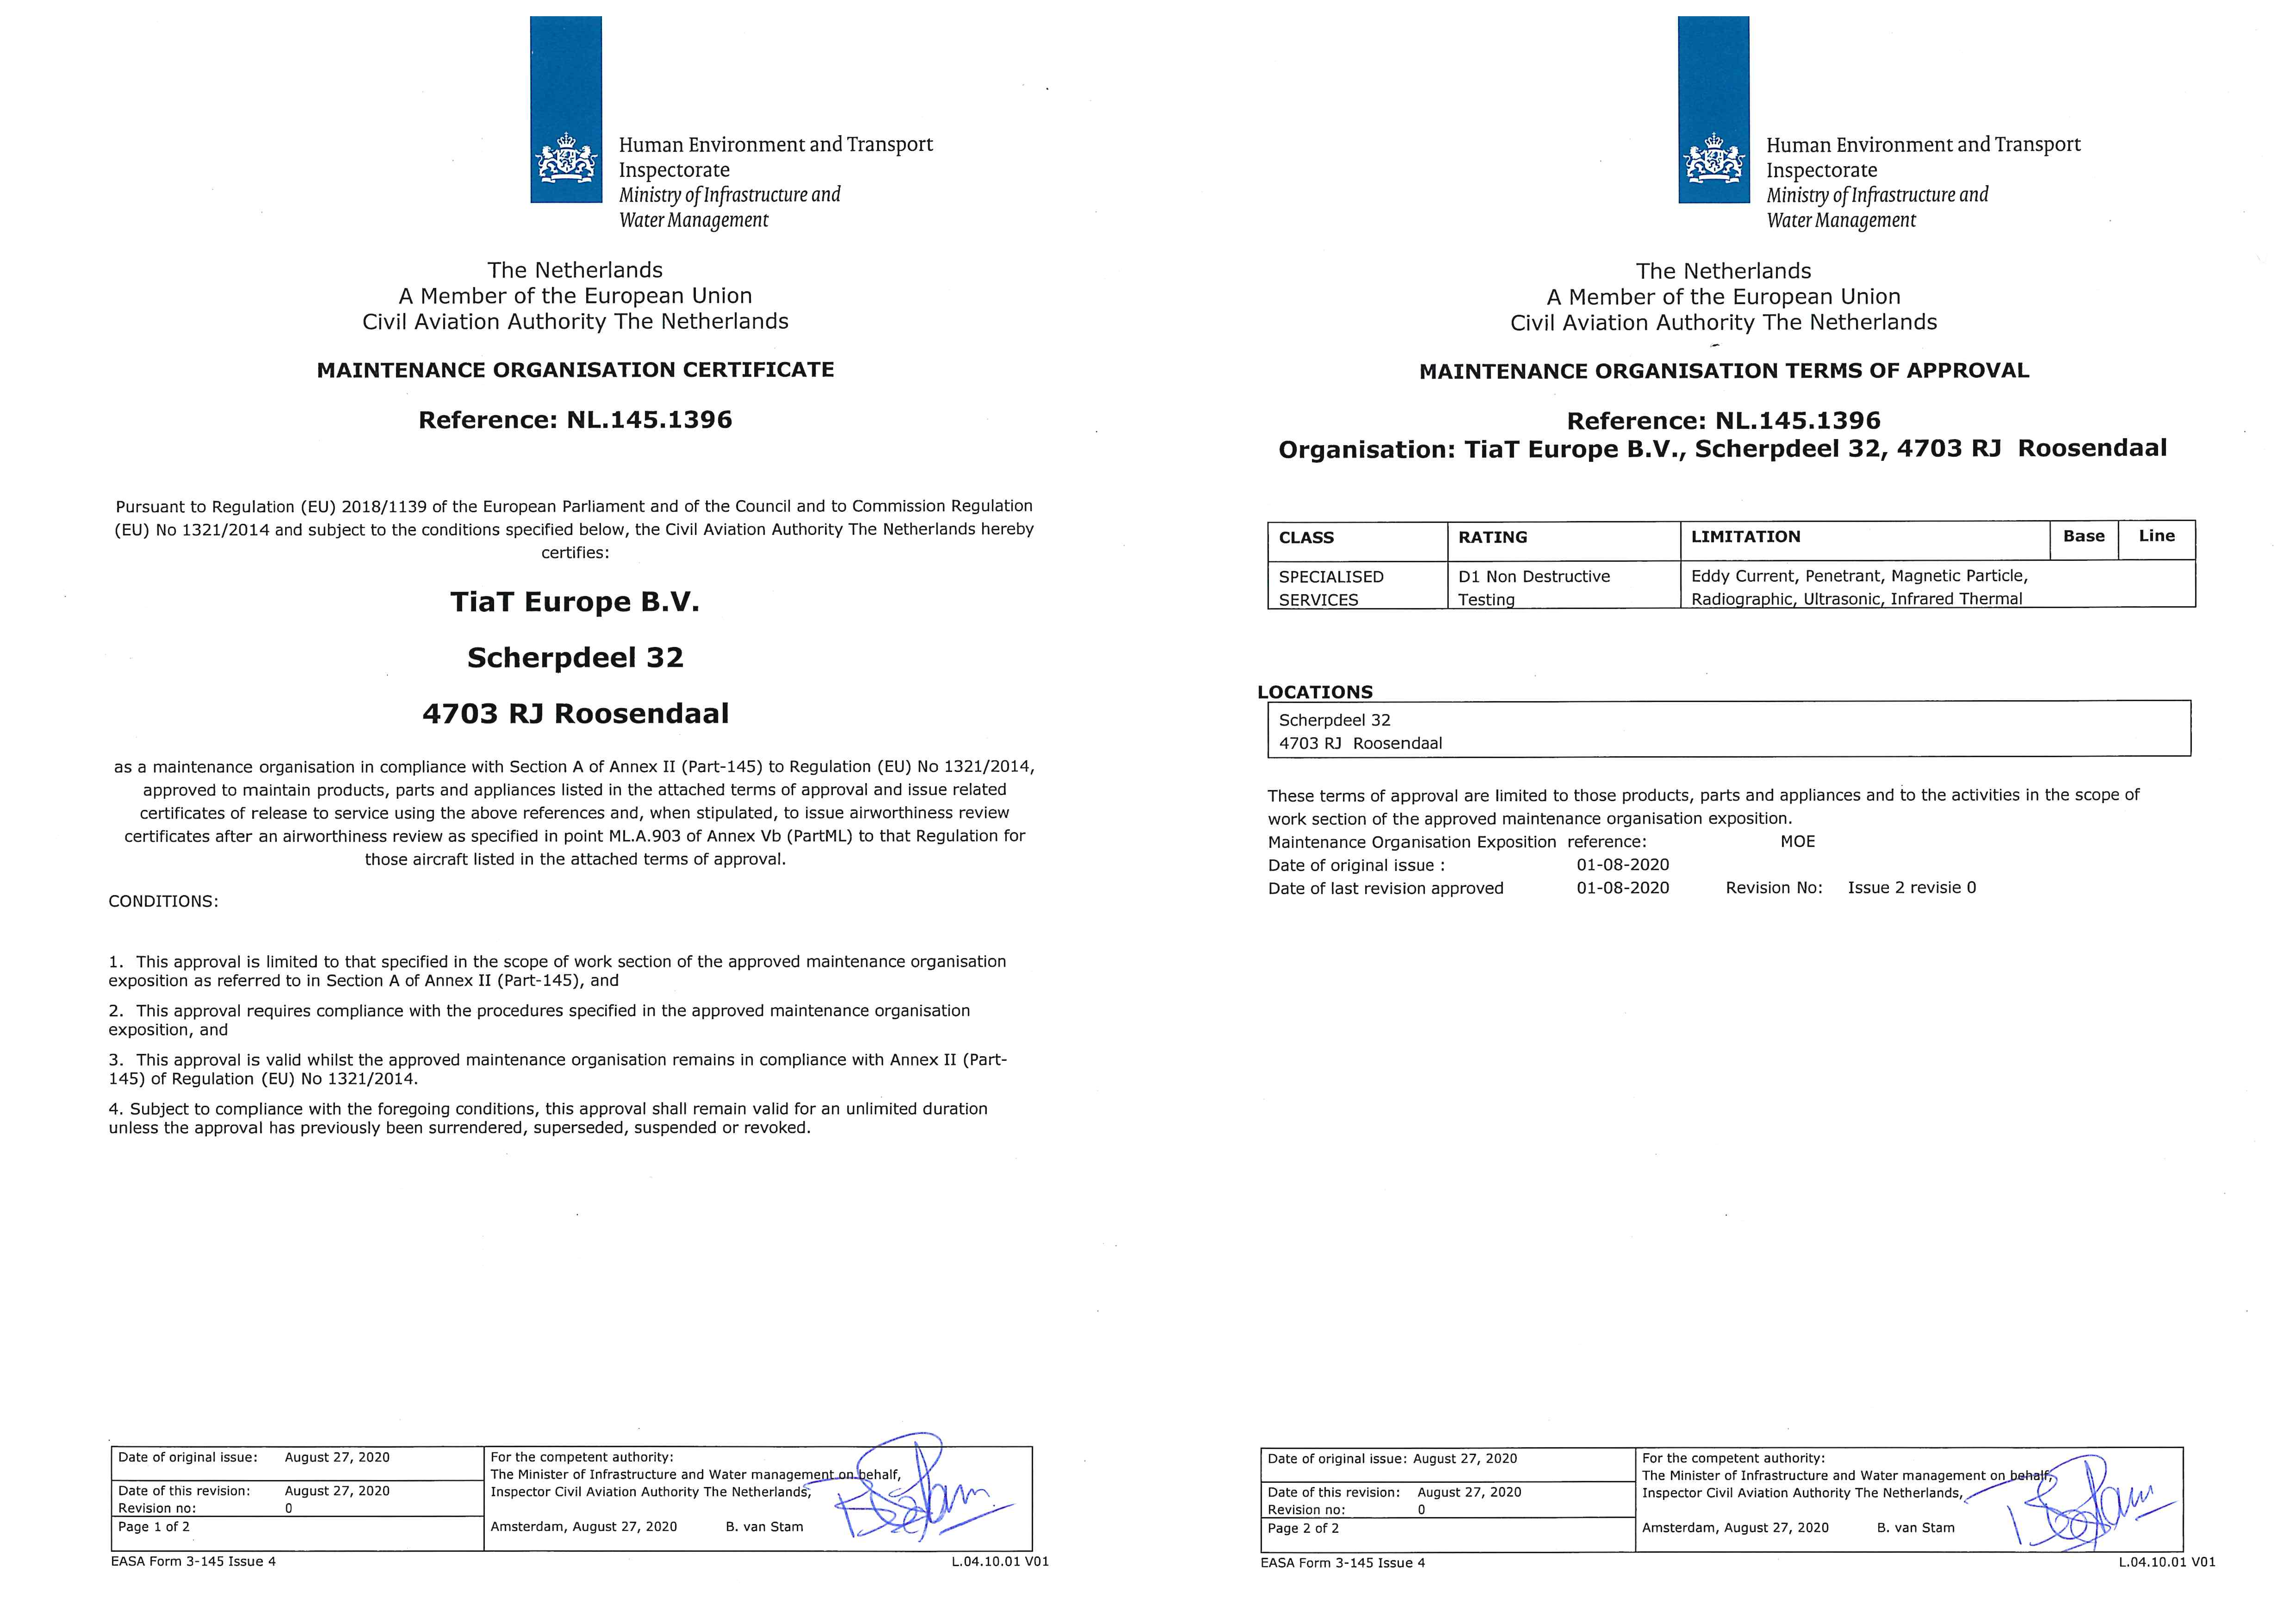 Part 145 Maintenance Organization Certificate – D1 Non Destructive Testing (no: NL.145.1396)